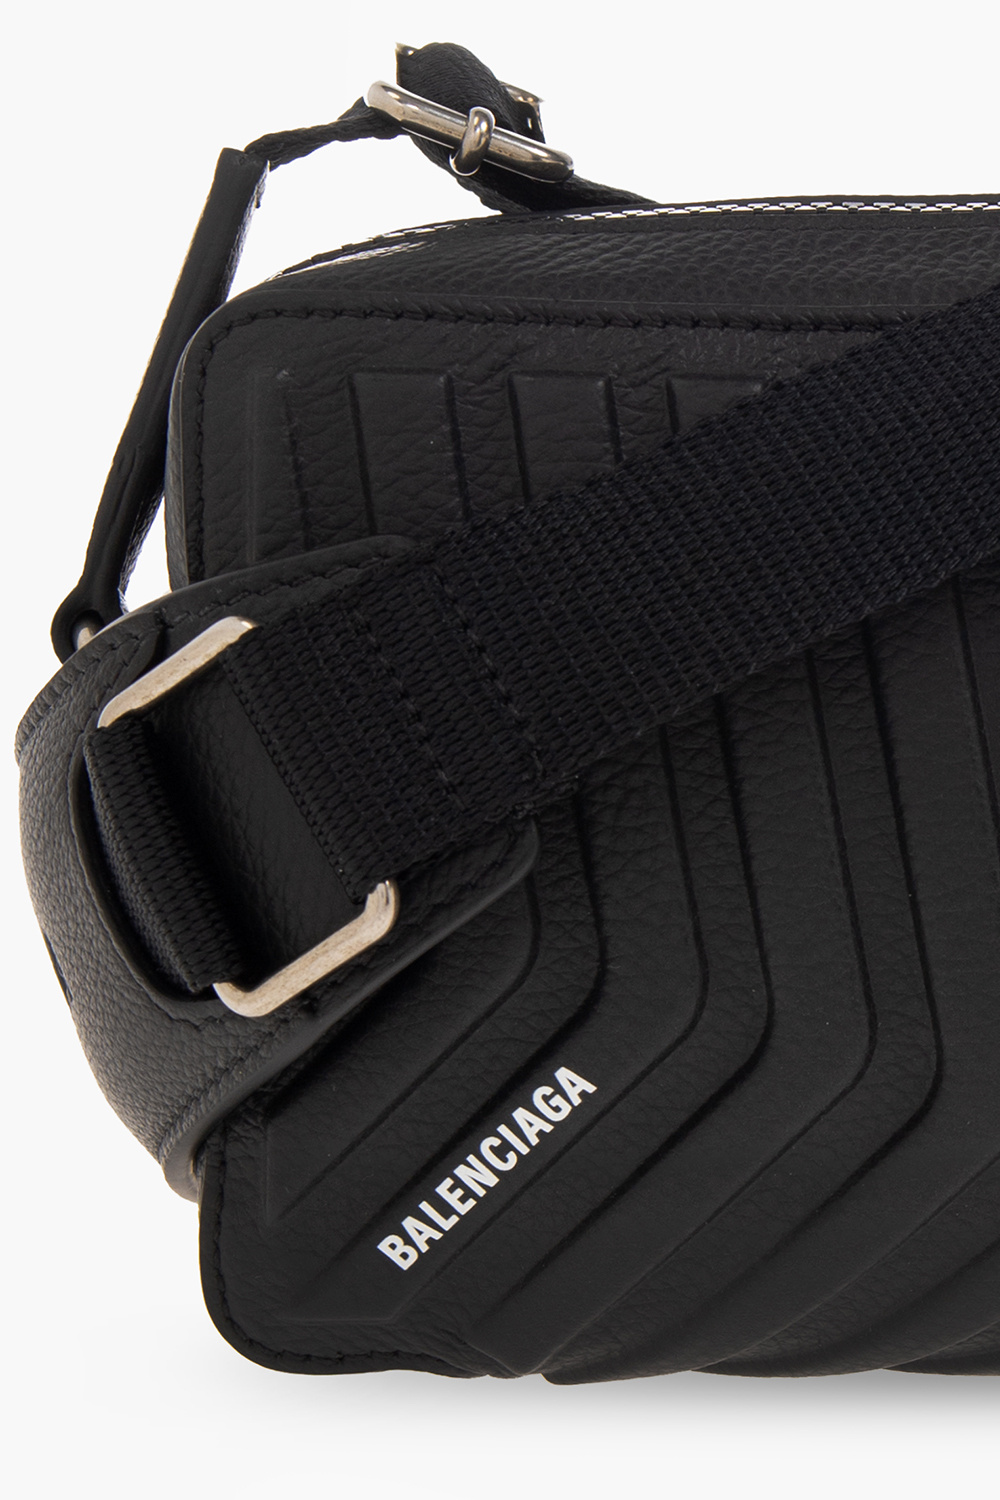 Balenciaga Car messenger camera bag - Black